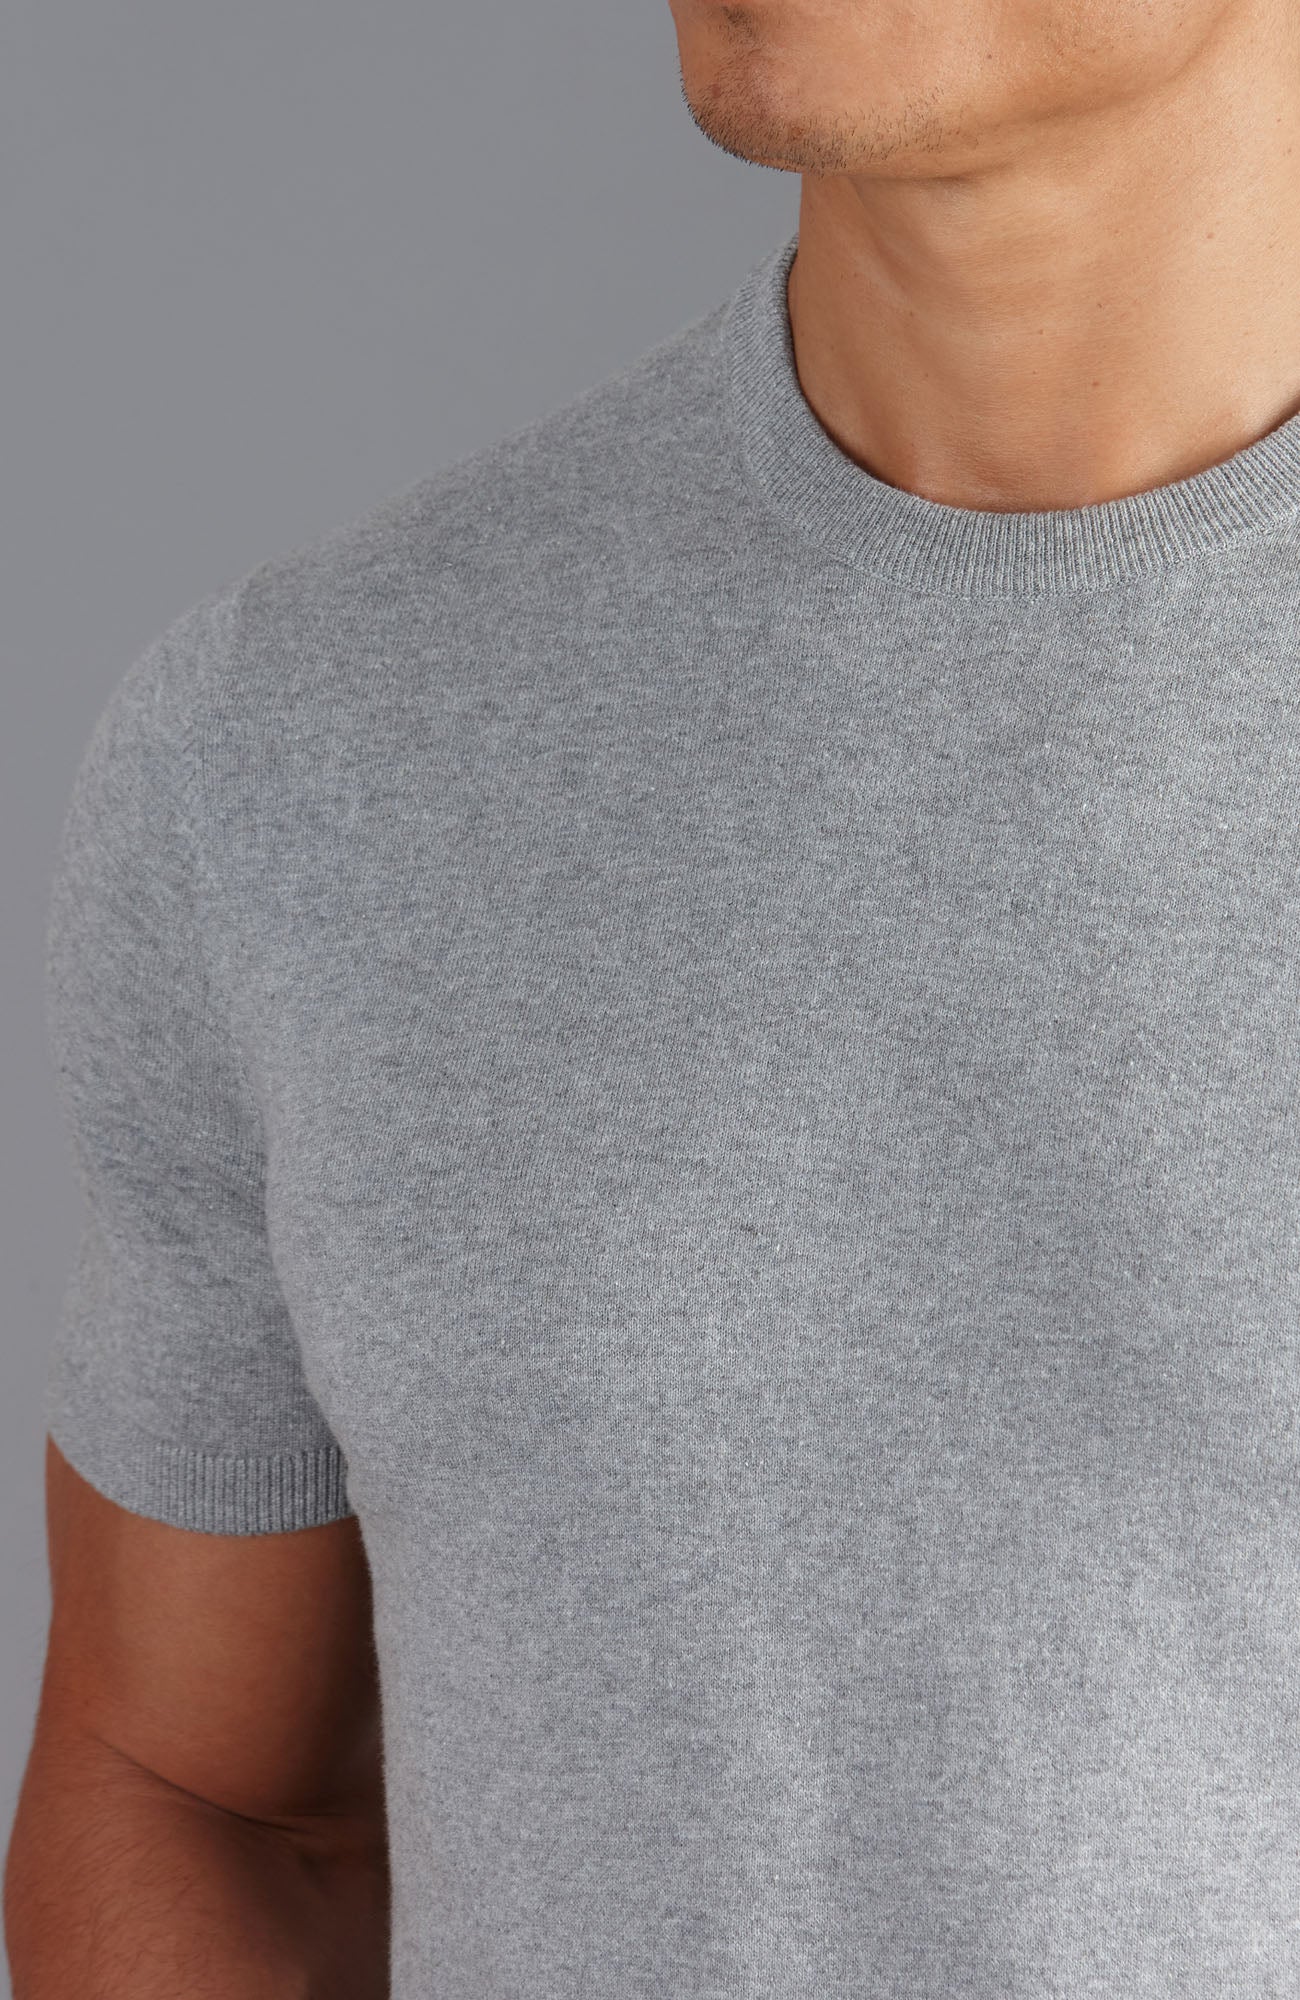 grey mens knitted t shirt